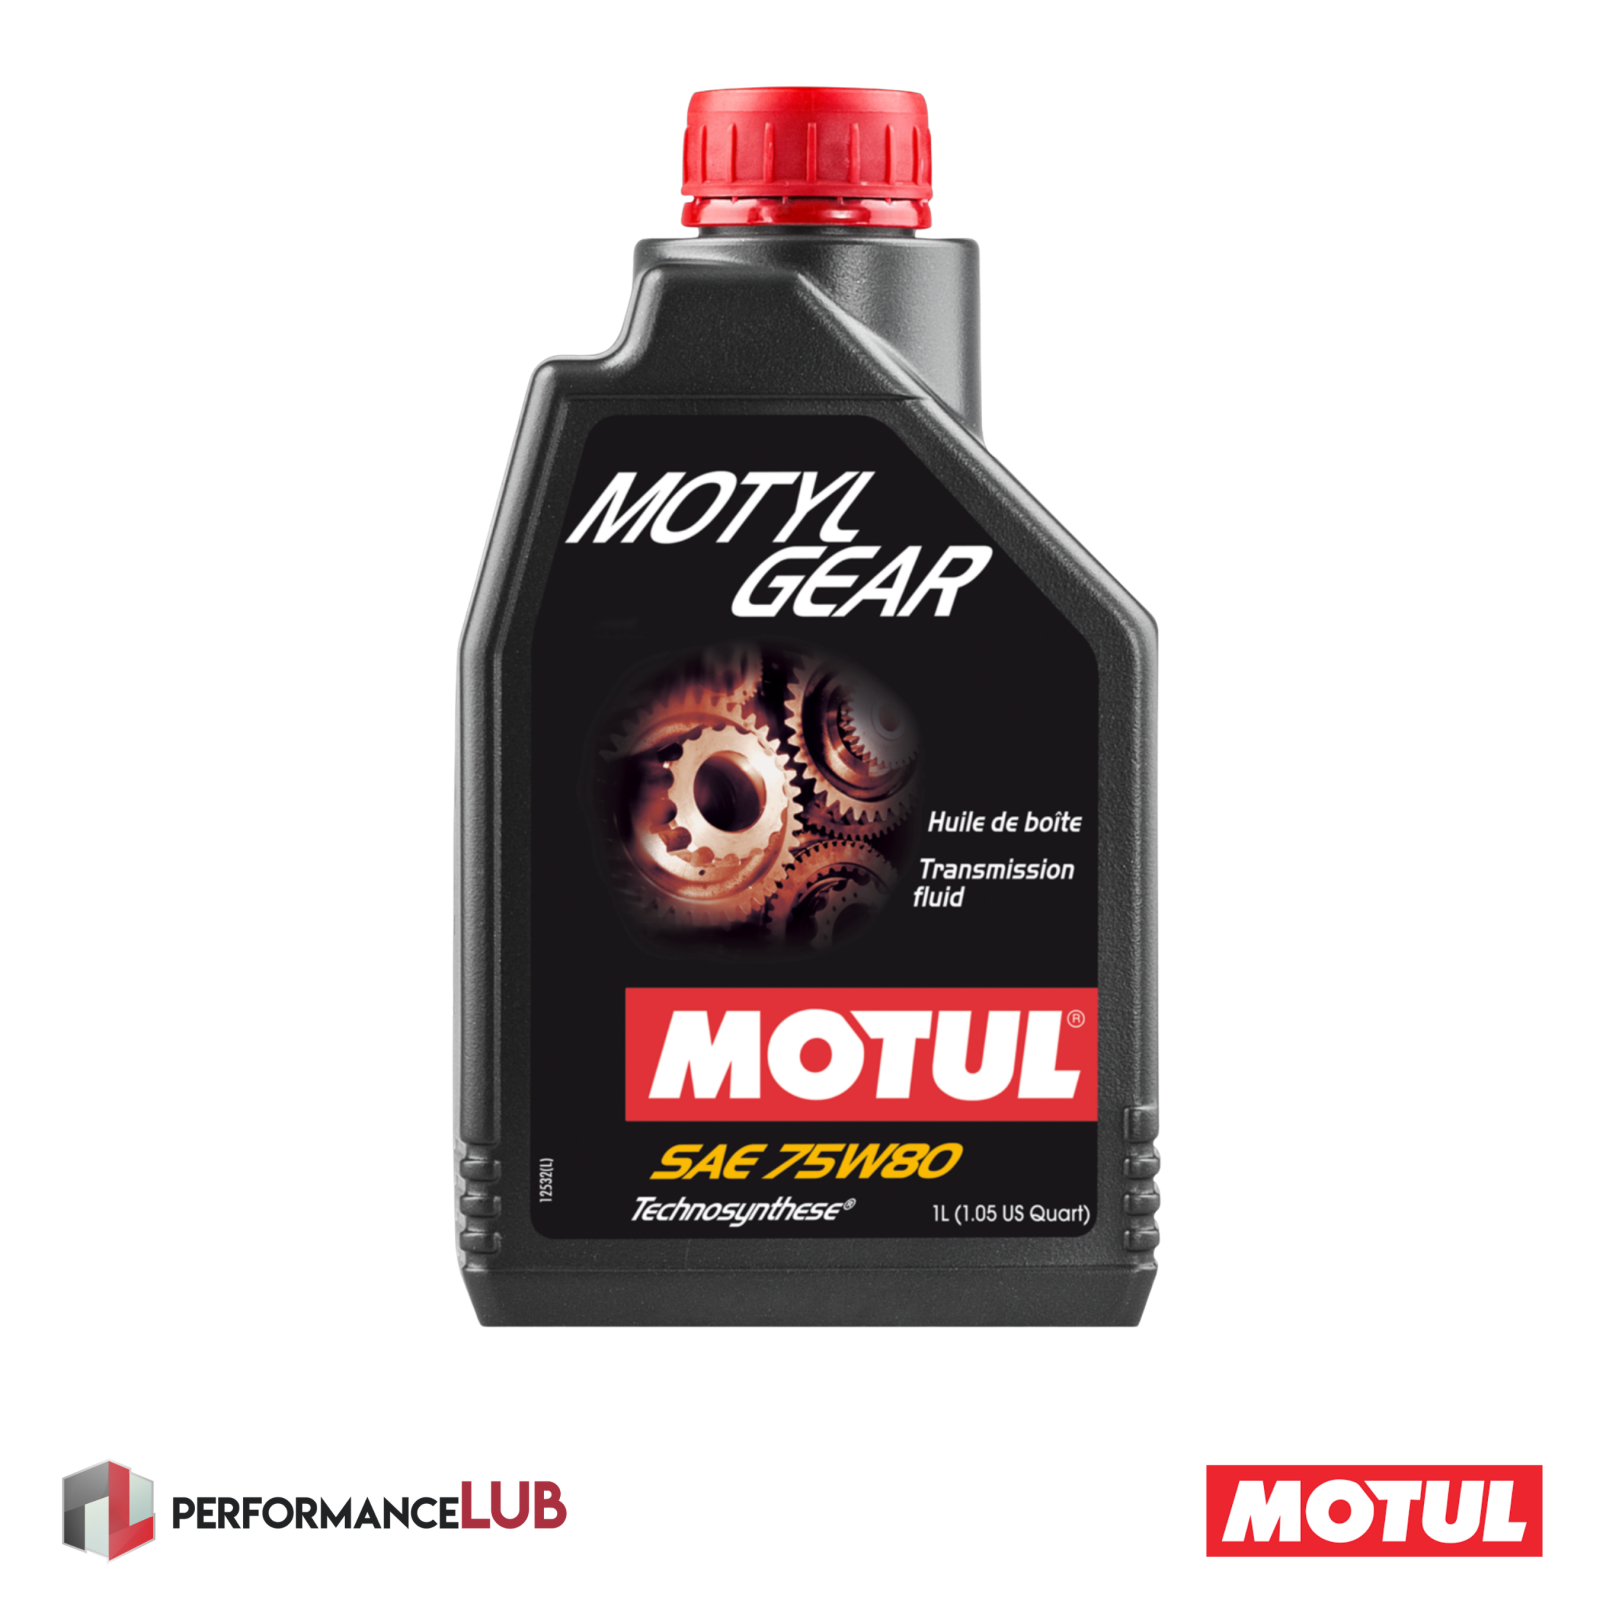 Motul Motylgear 75W80 (API GL-4/GL-5) - 1 litro - PerformanceLUB Lubrificantes Premium